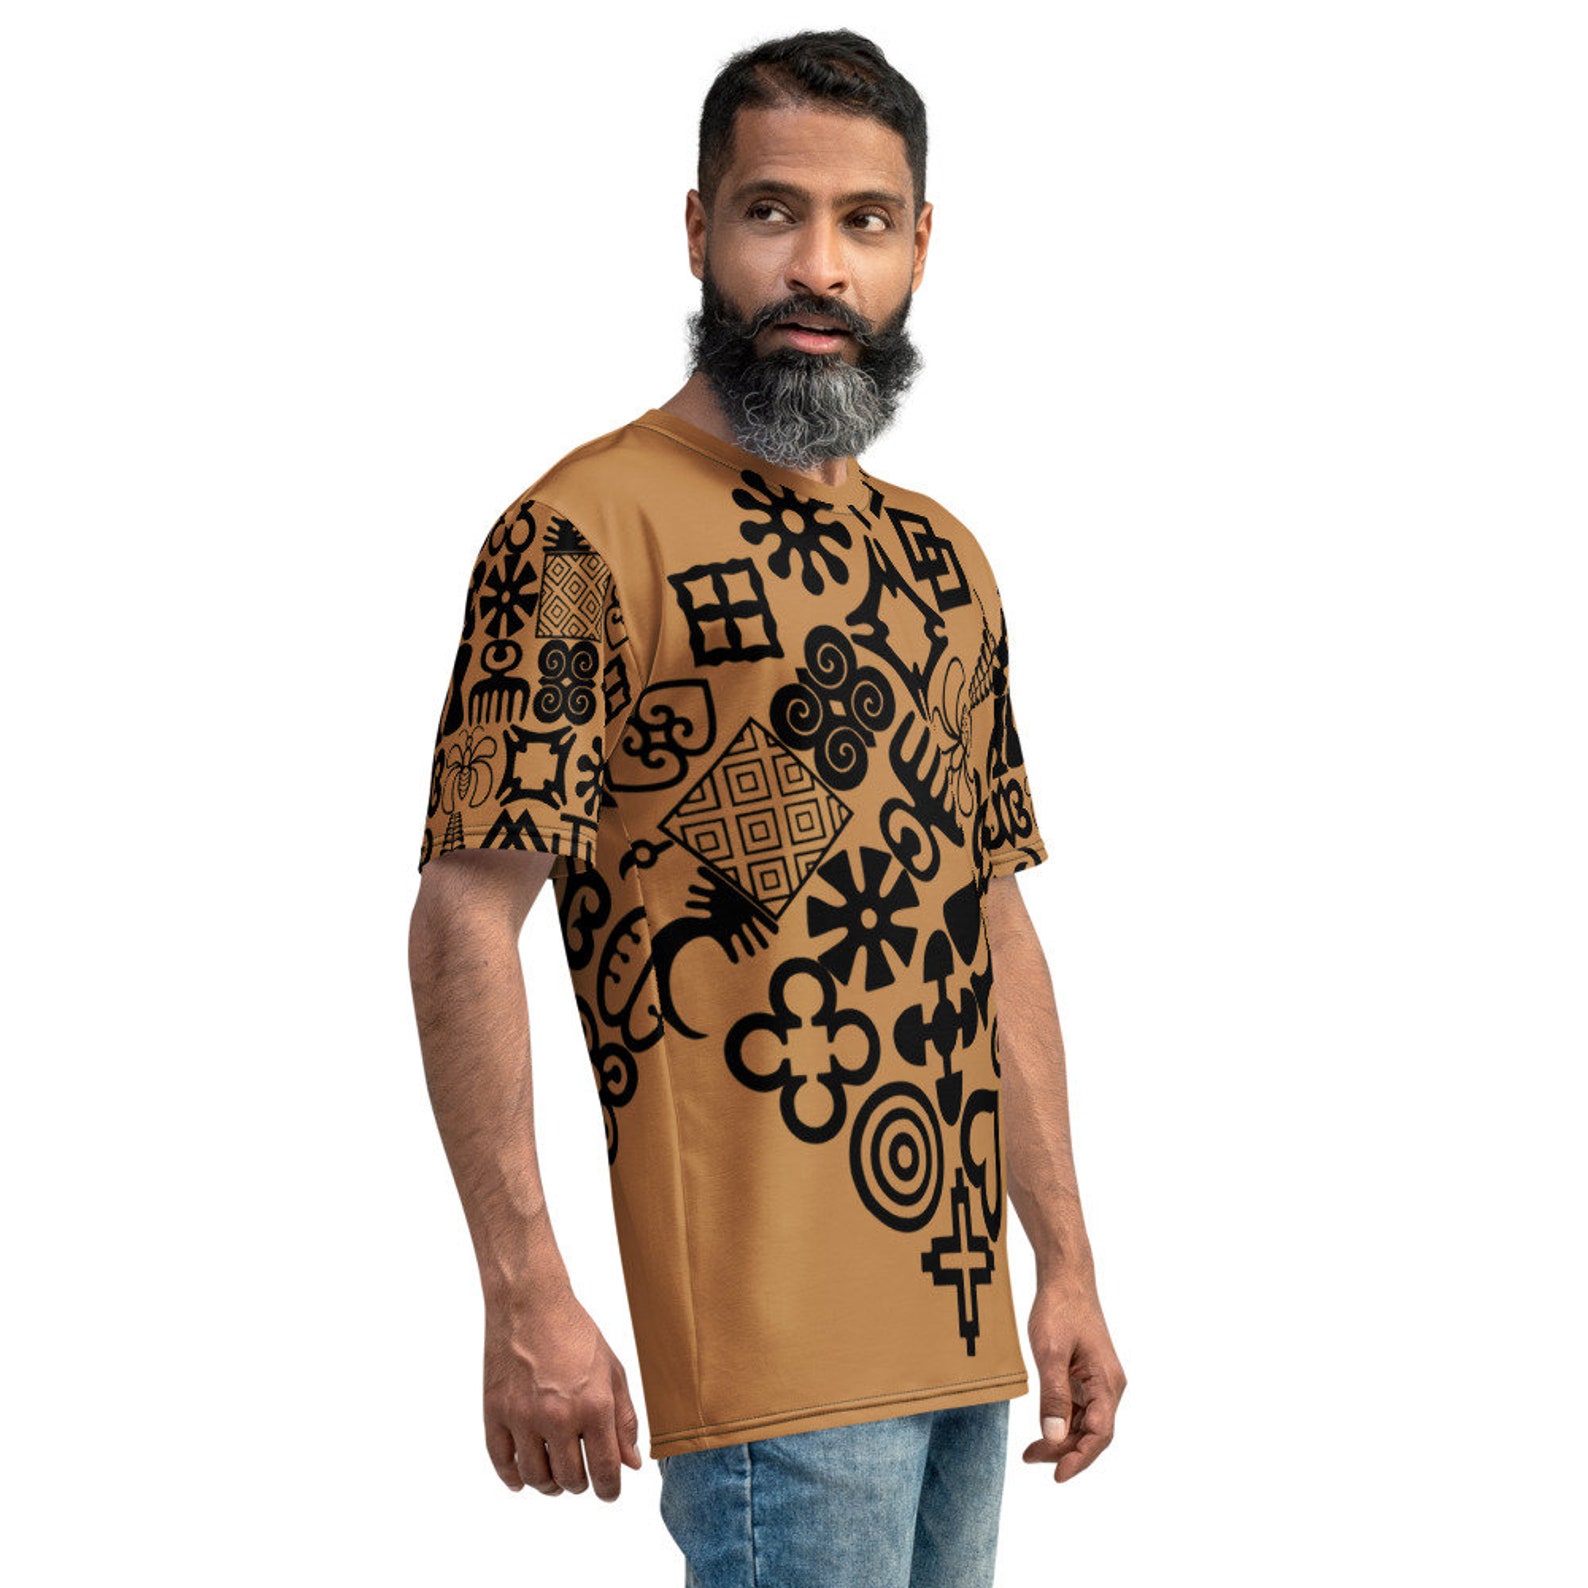 African Adynkra Symbols HERITAGE DESIGN Men's T-shirt | Etsy